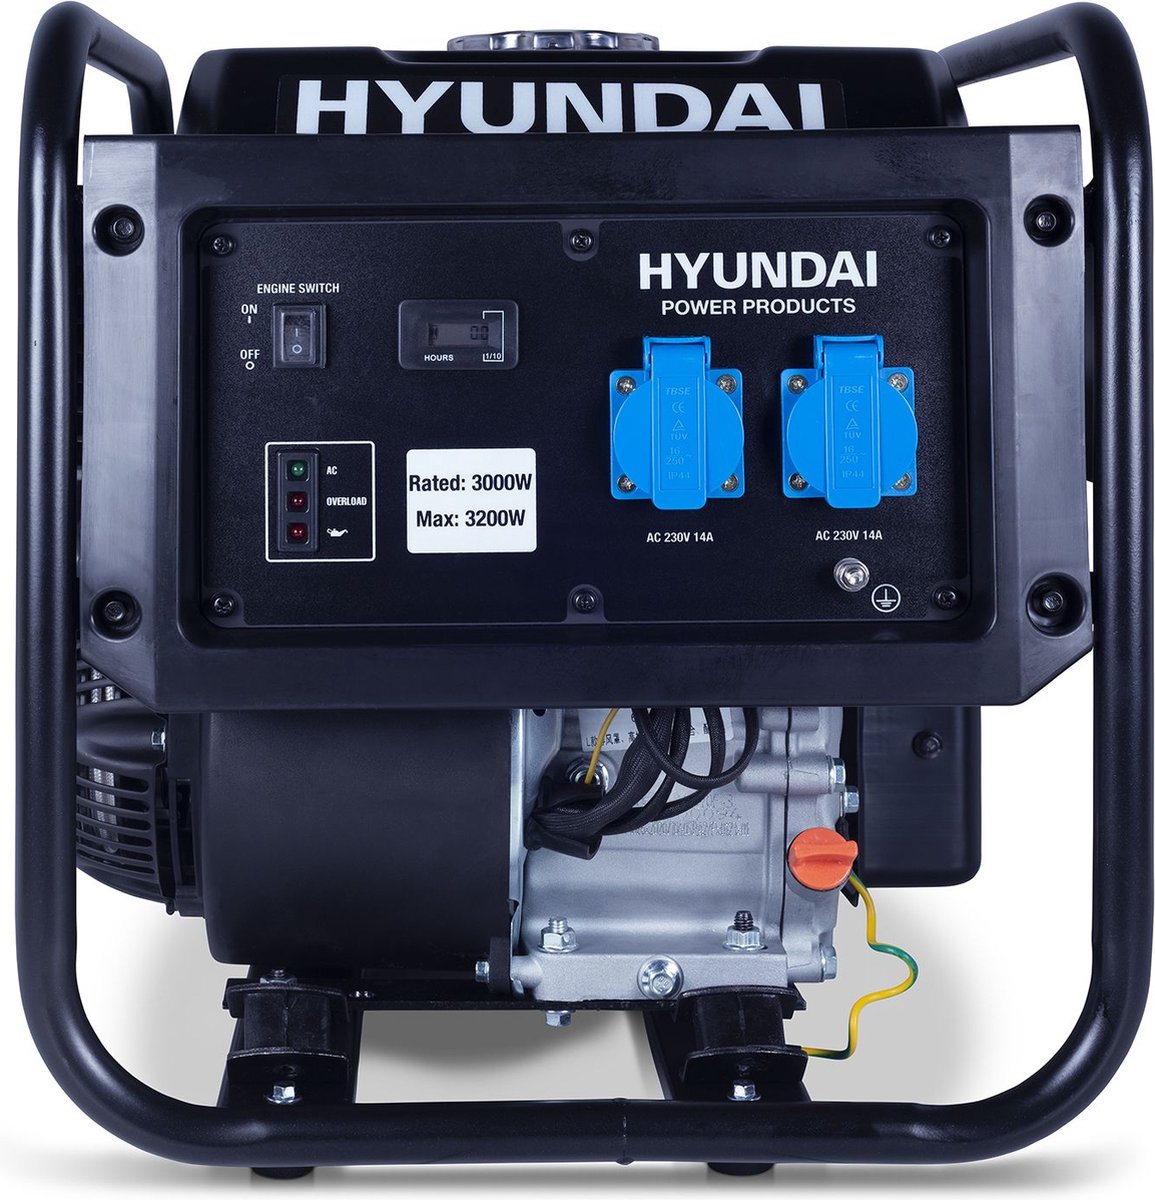 HYUNDAI convector generator 3,2 kW - Laag oliepeil alarm - Quick start - Slechts 29 kg - Hyundai